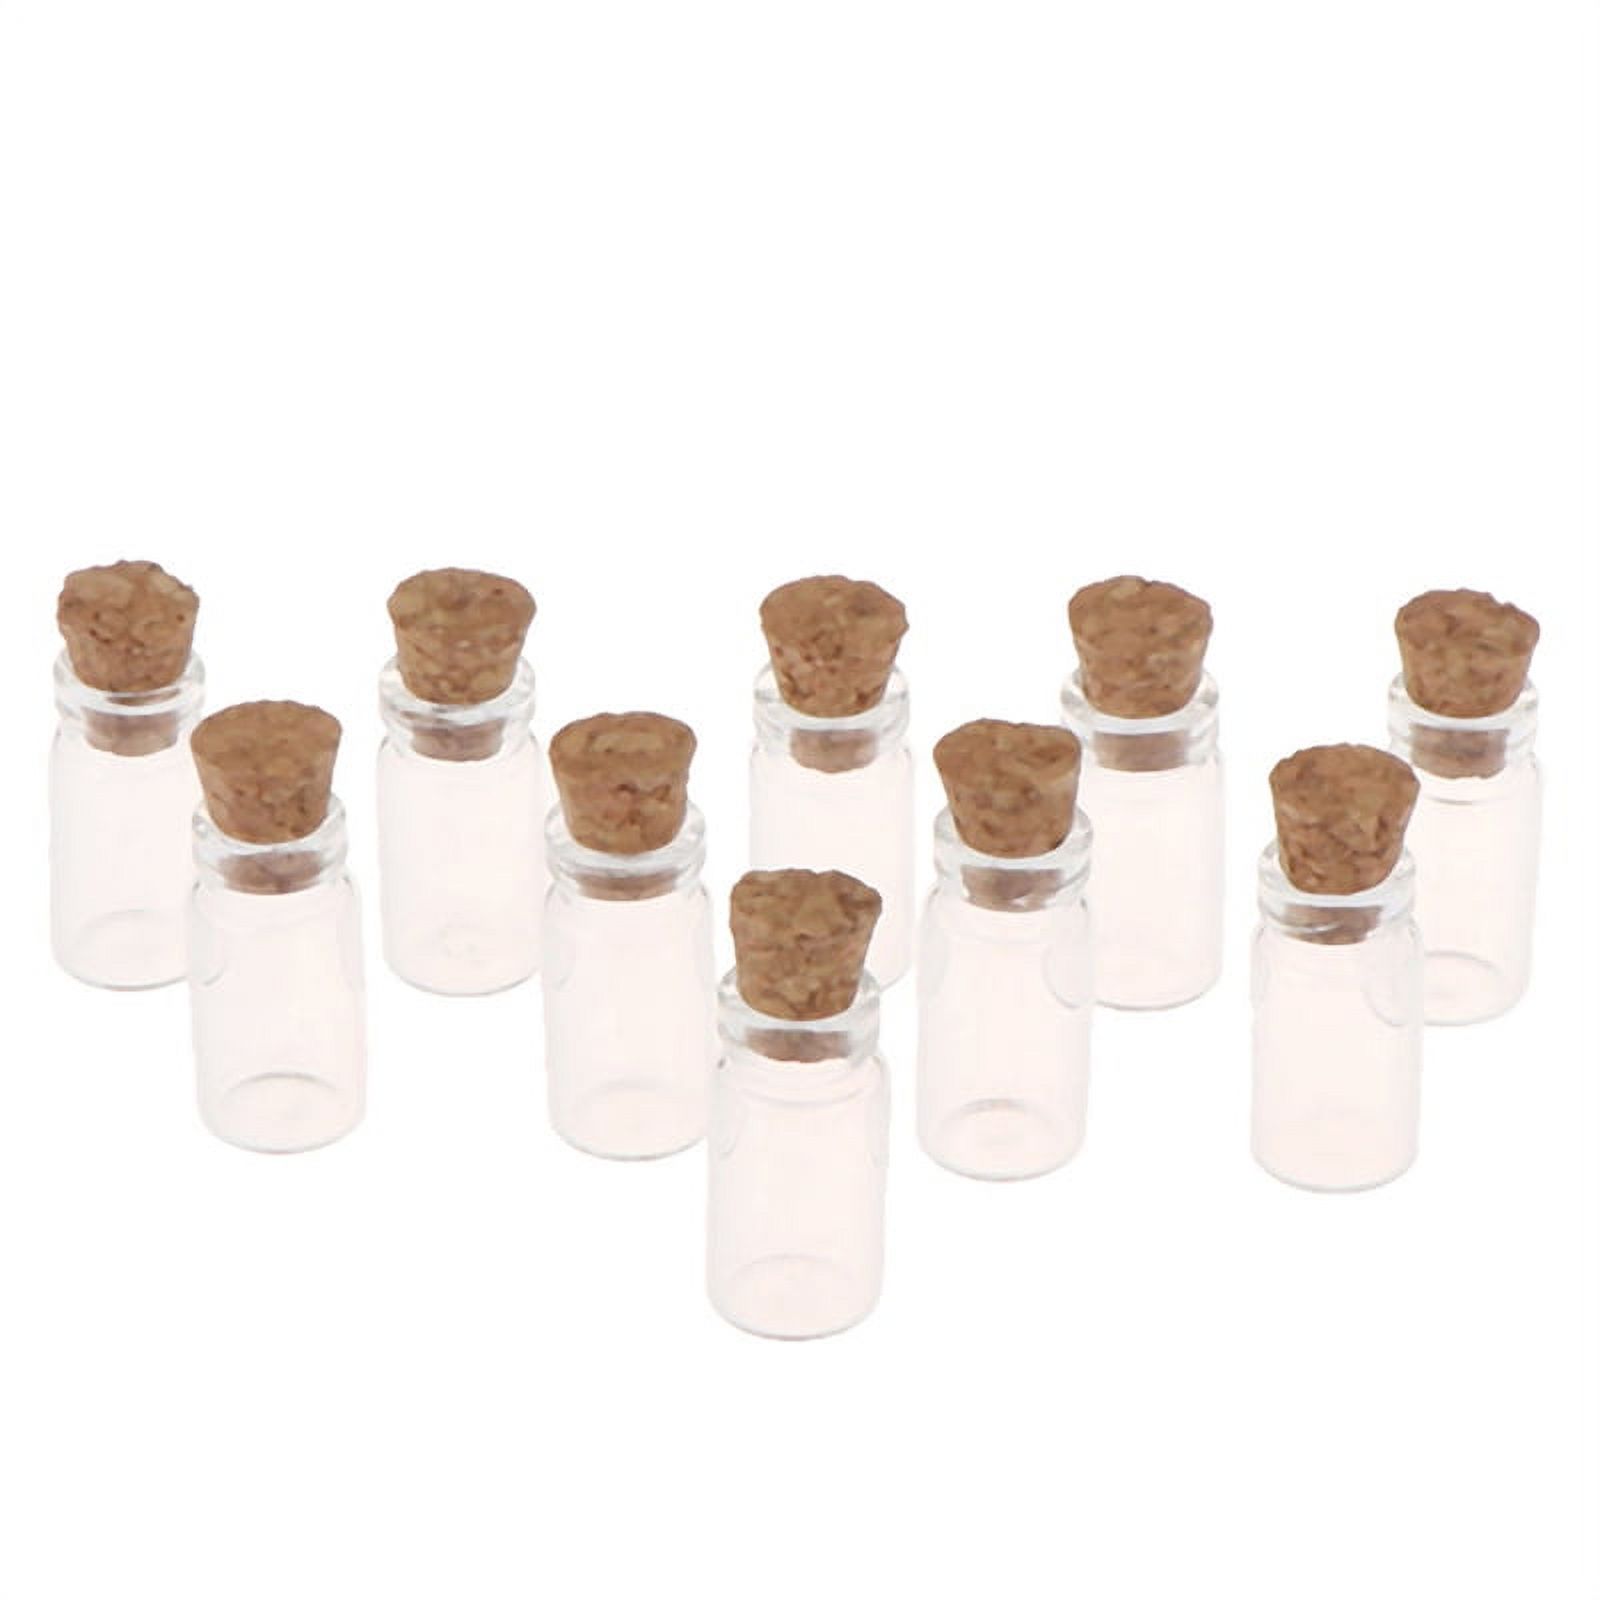 MageCrux 10PCS 1:12 Dollhouse Miniature Glass Bottle Jars Food Storage Kitchen Accessorie - image 3 of 6